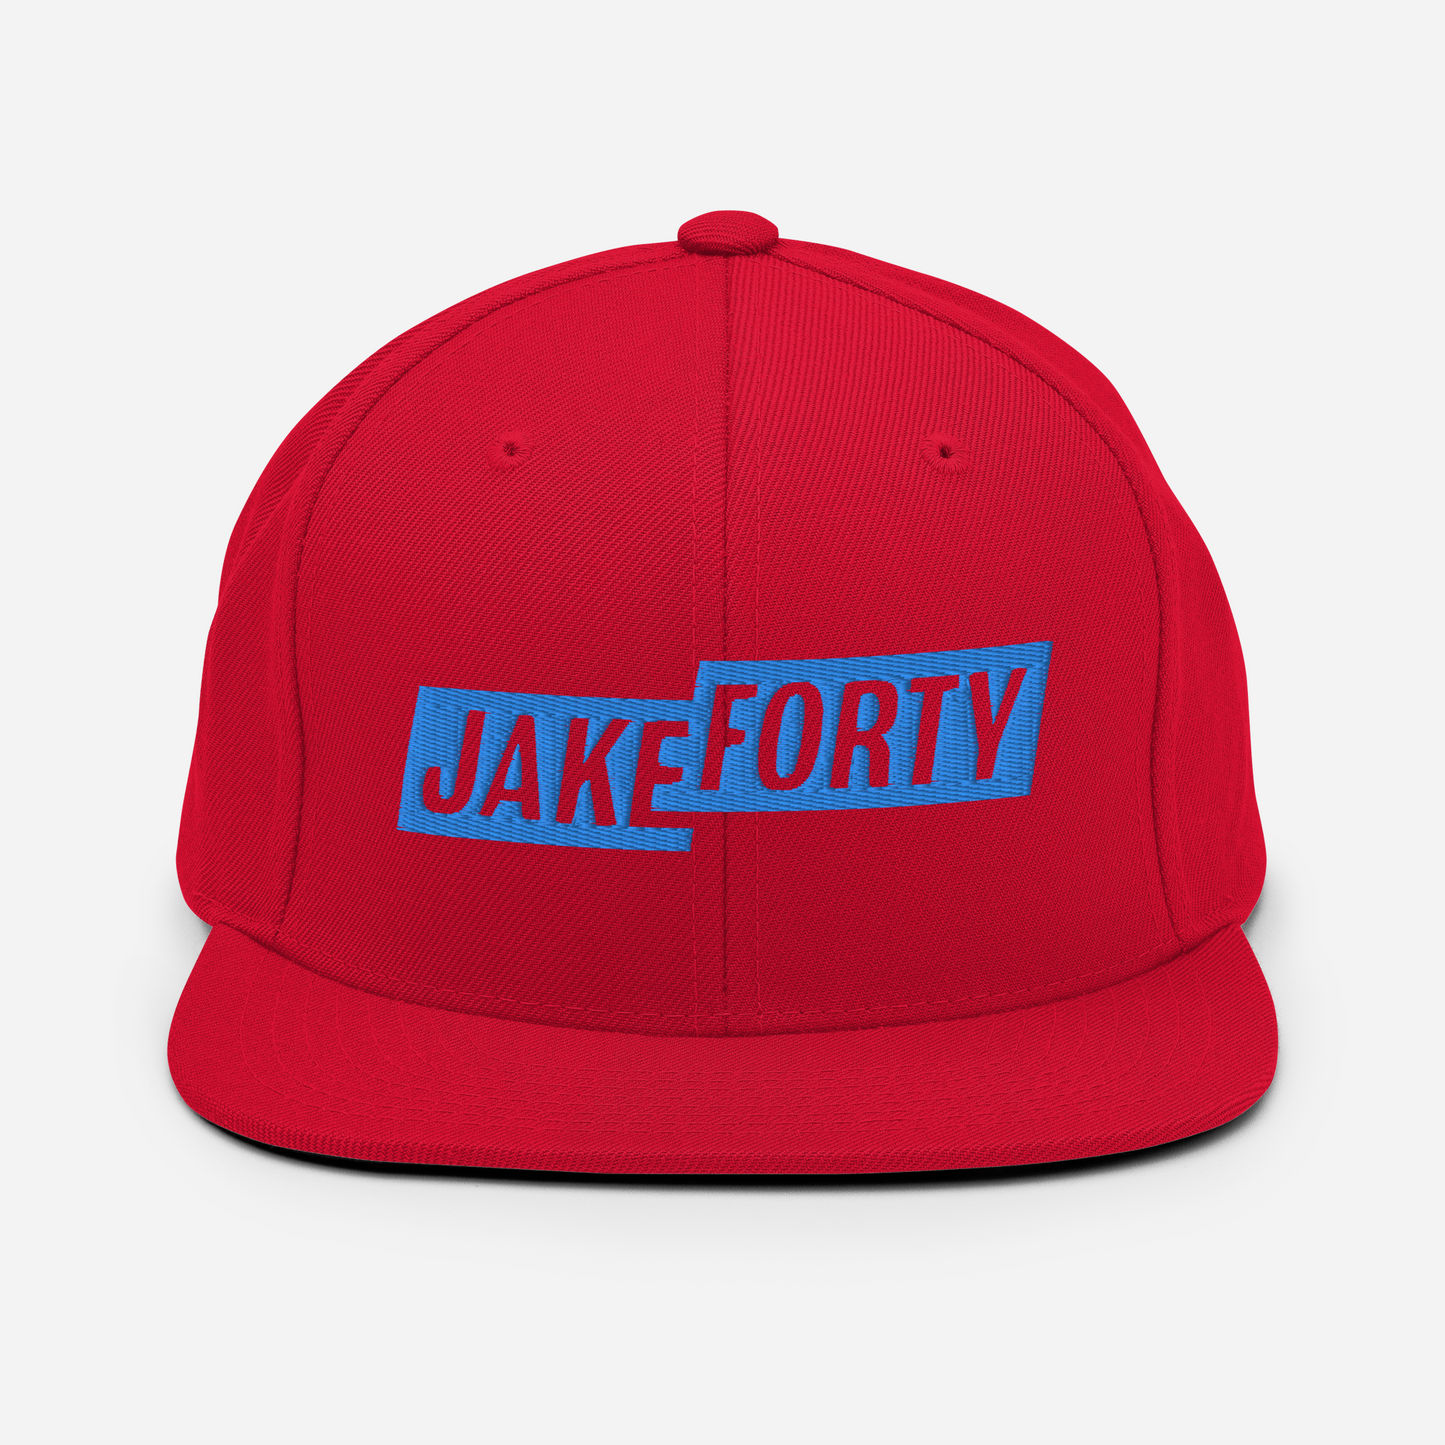 Jake Forty Snapback Hat